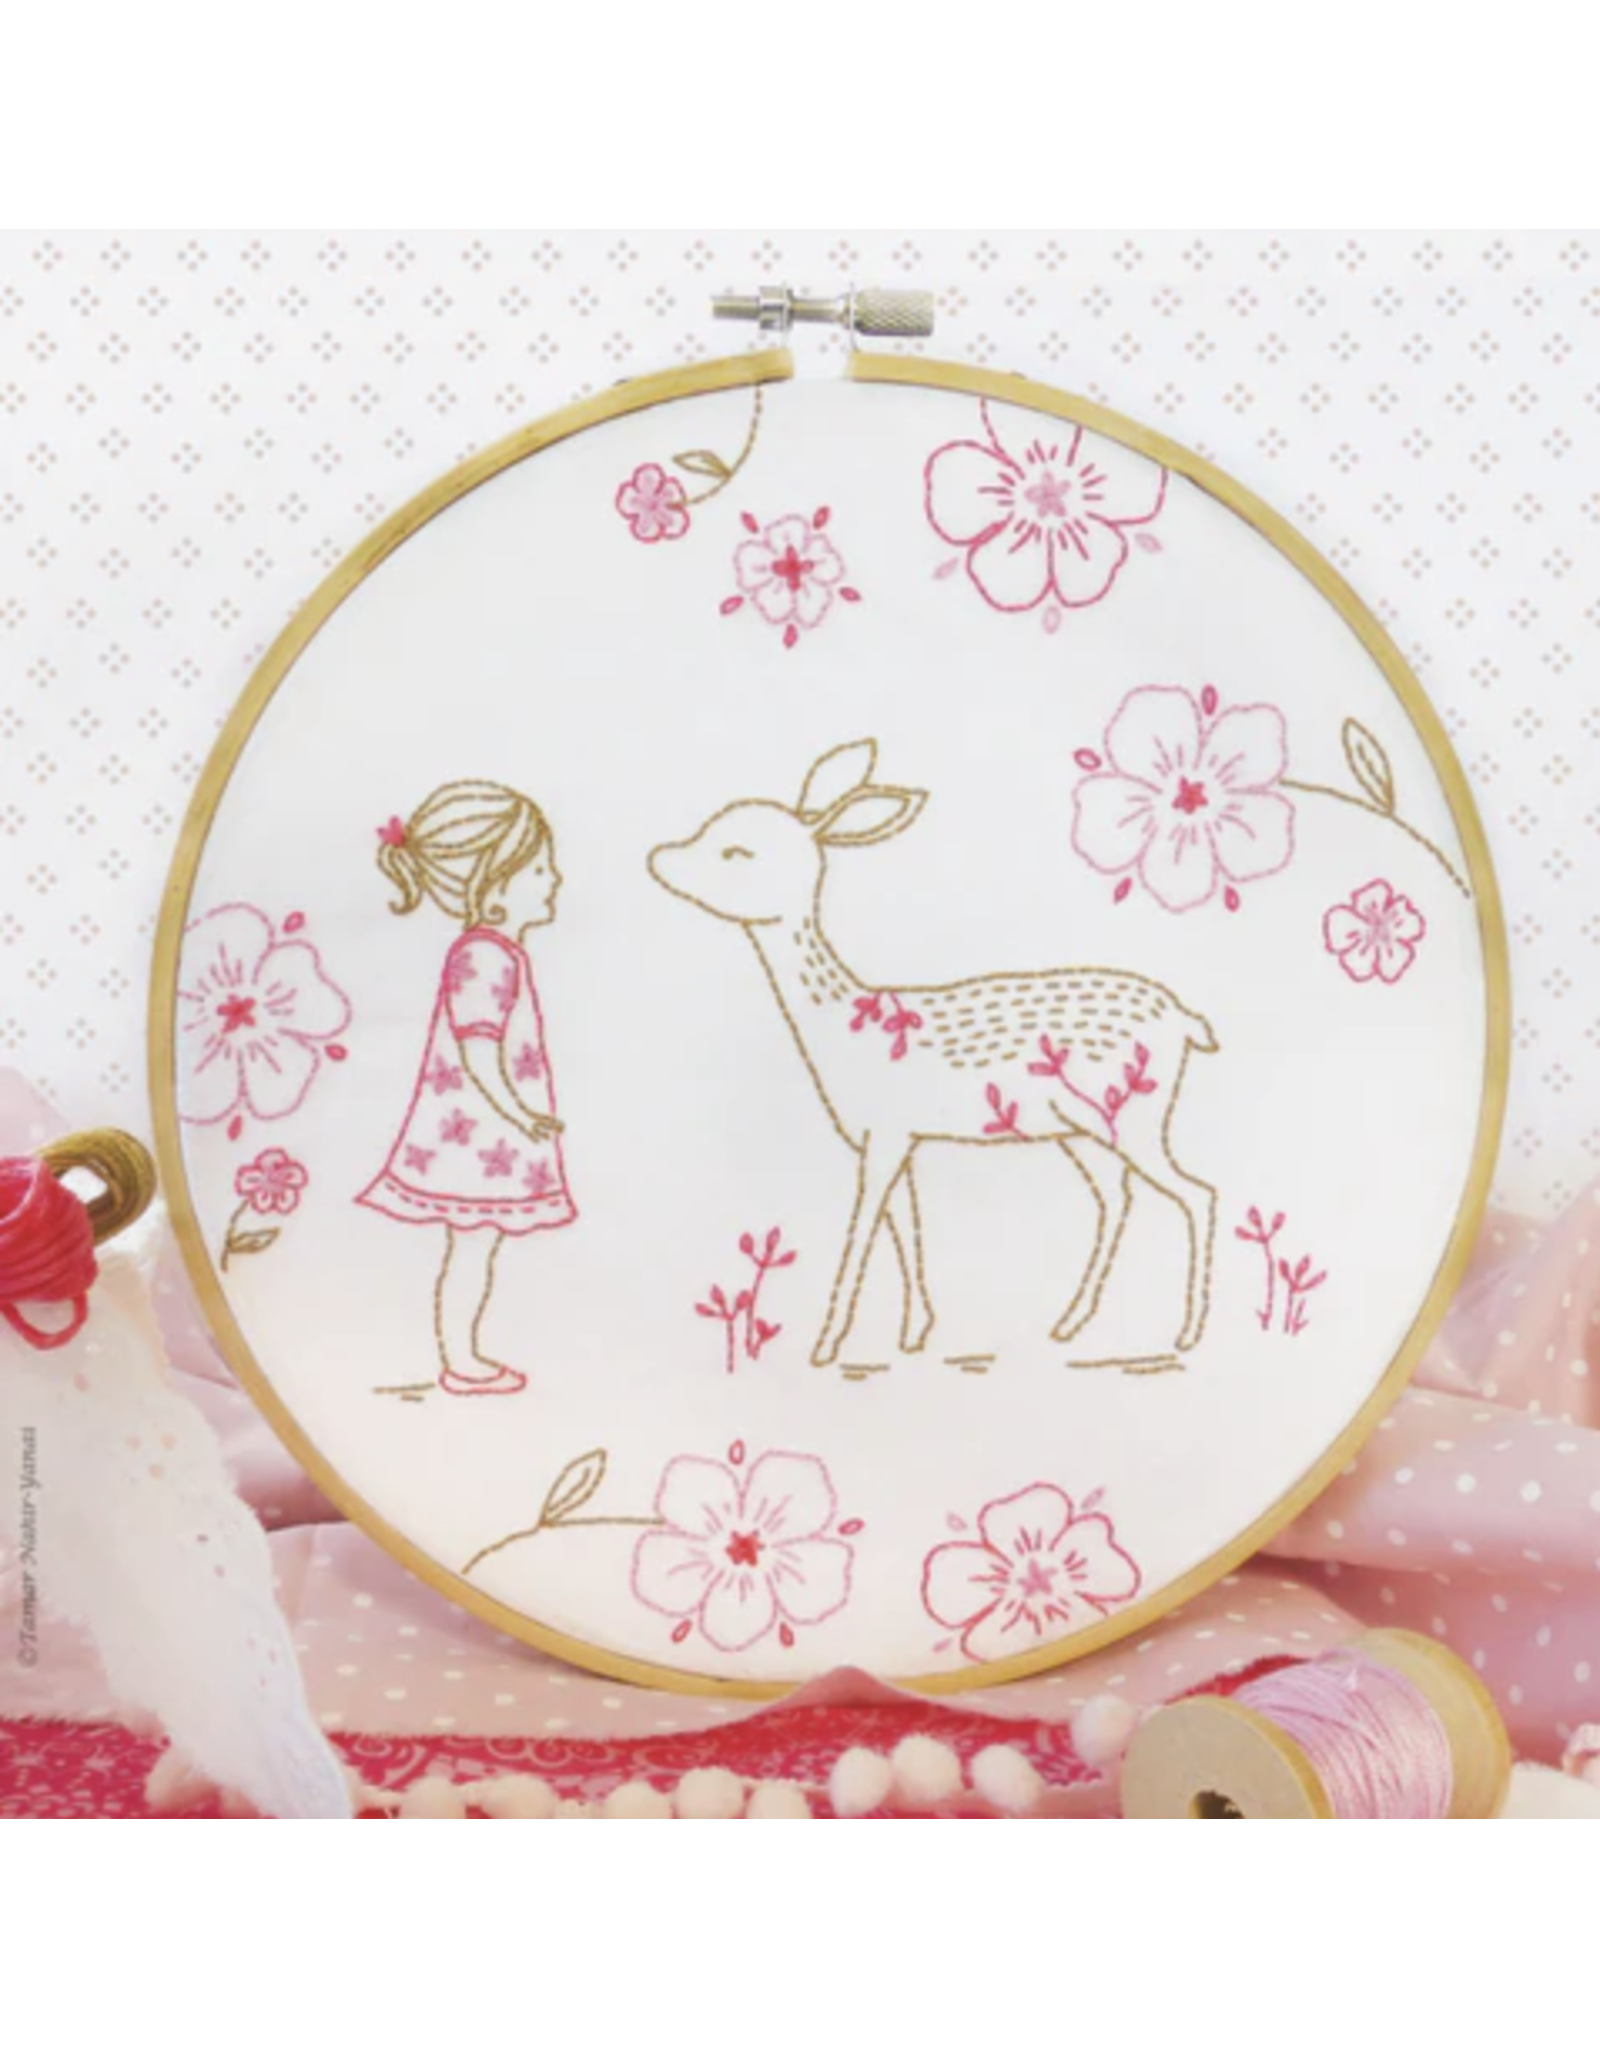 Tamar Nahir Yanai Bambi Girl - 8" Embroidery Kit